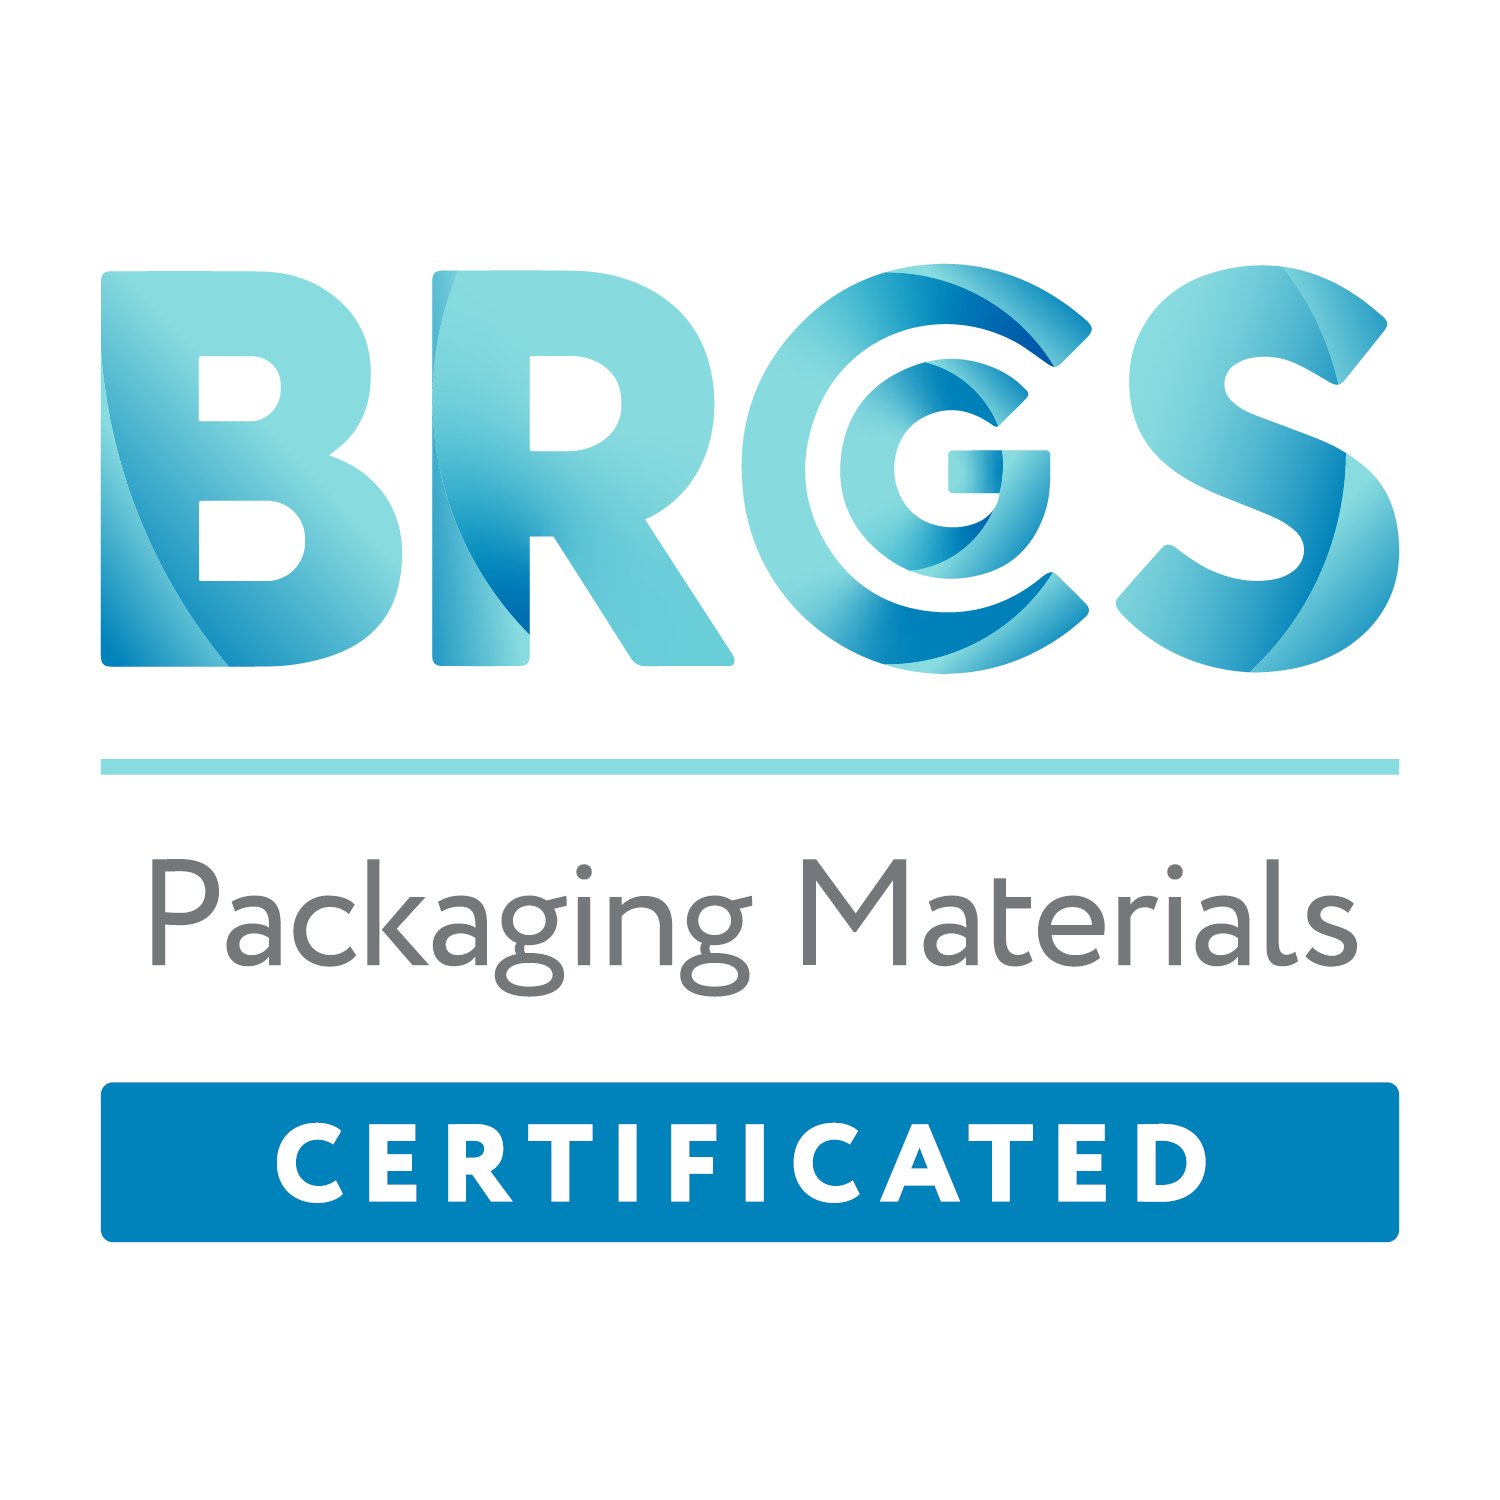 Intrinsic awarded BRCGS certification